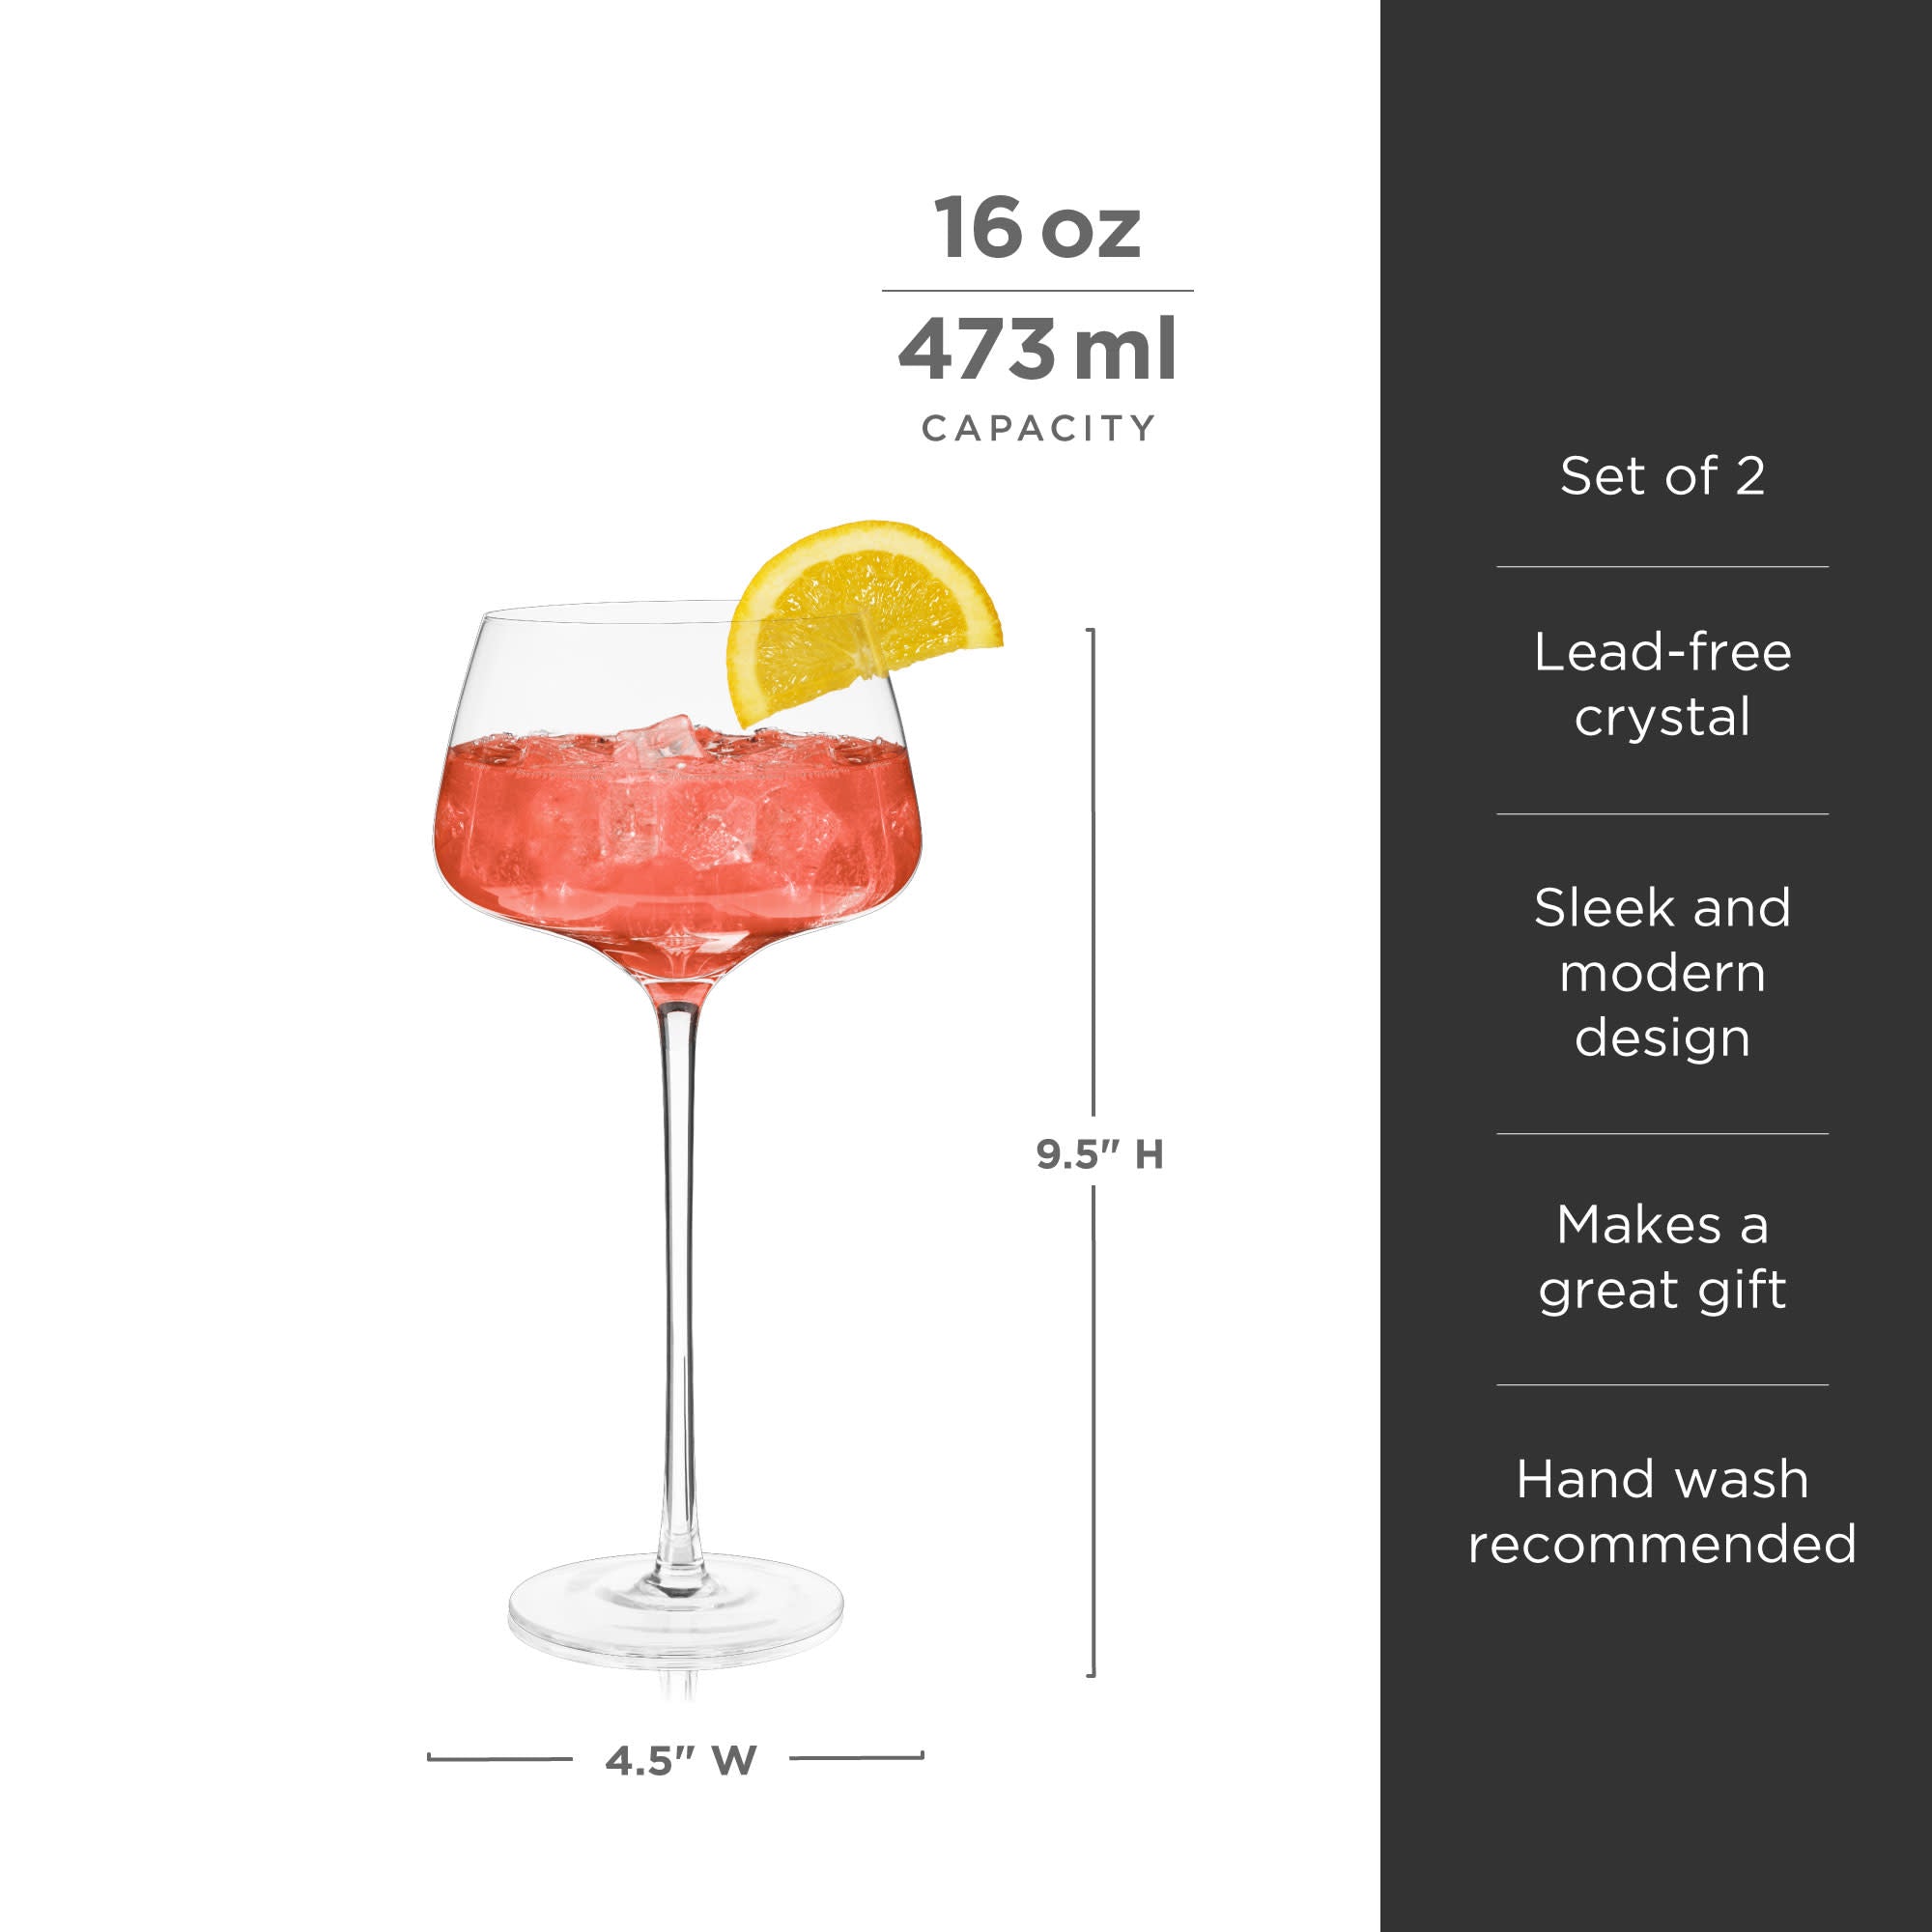 Viski Angled Crystal Amaro Spritz Glasses